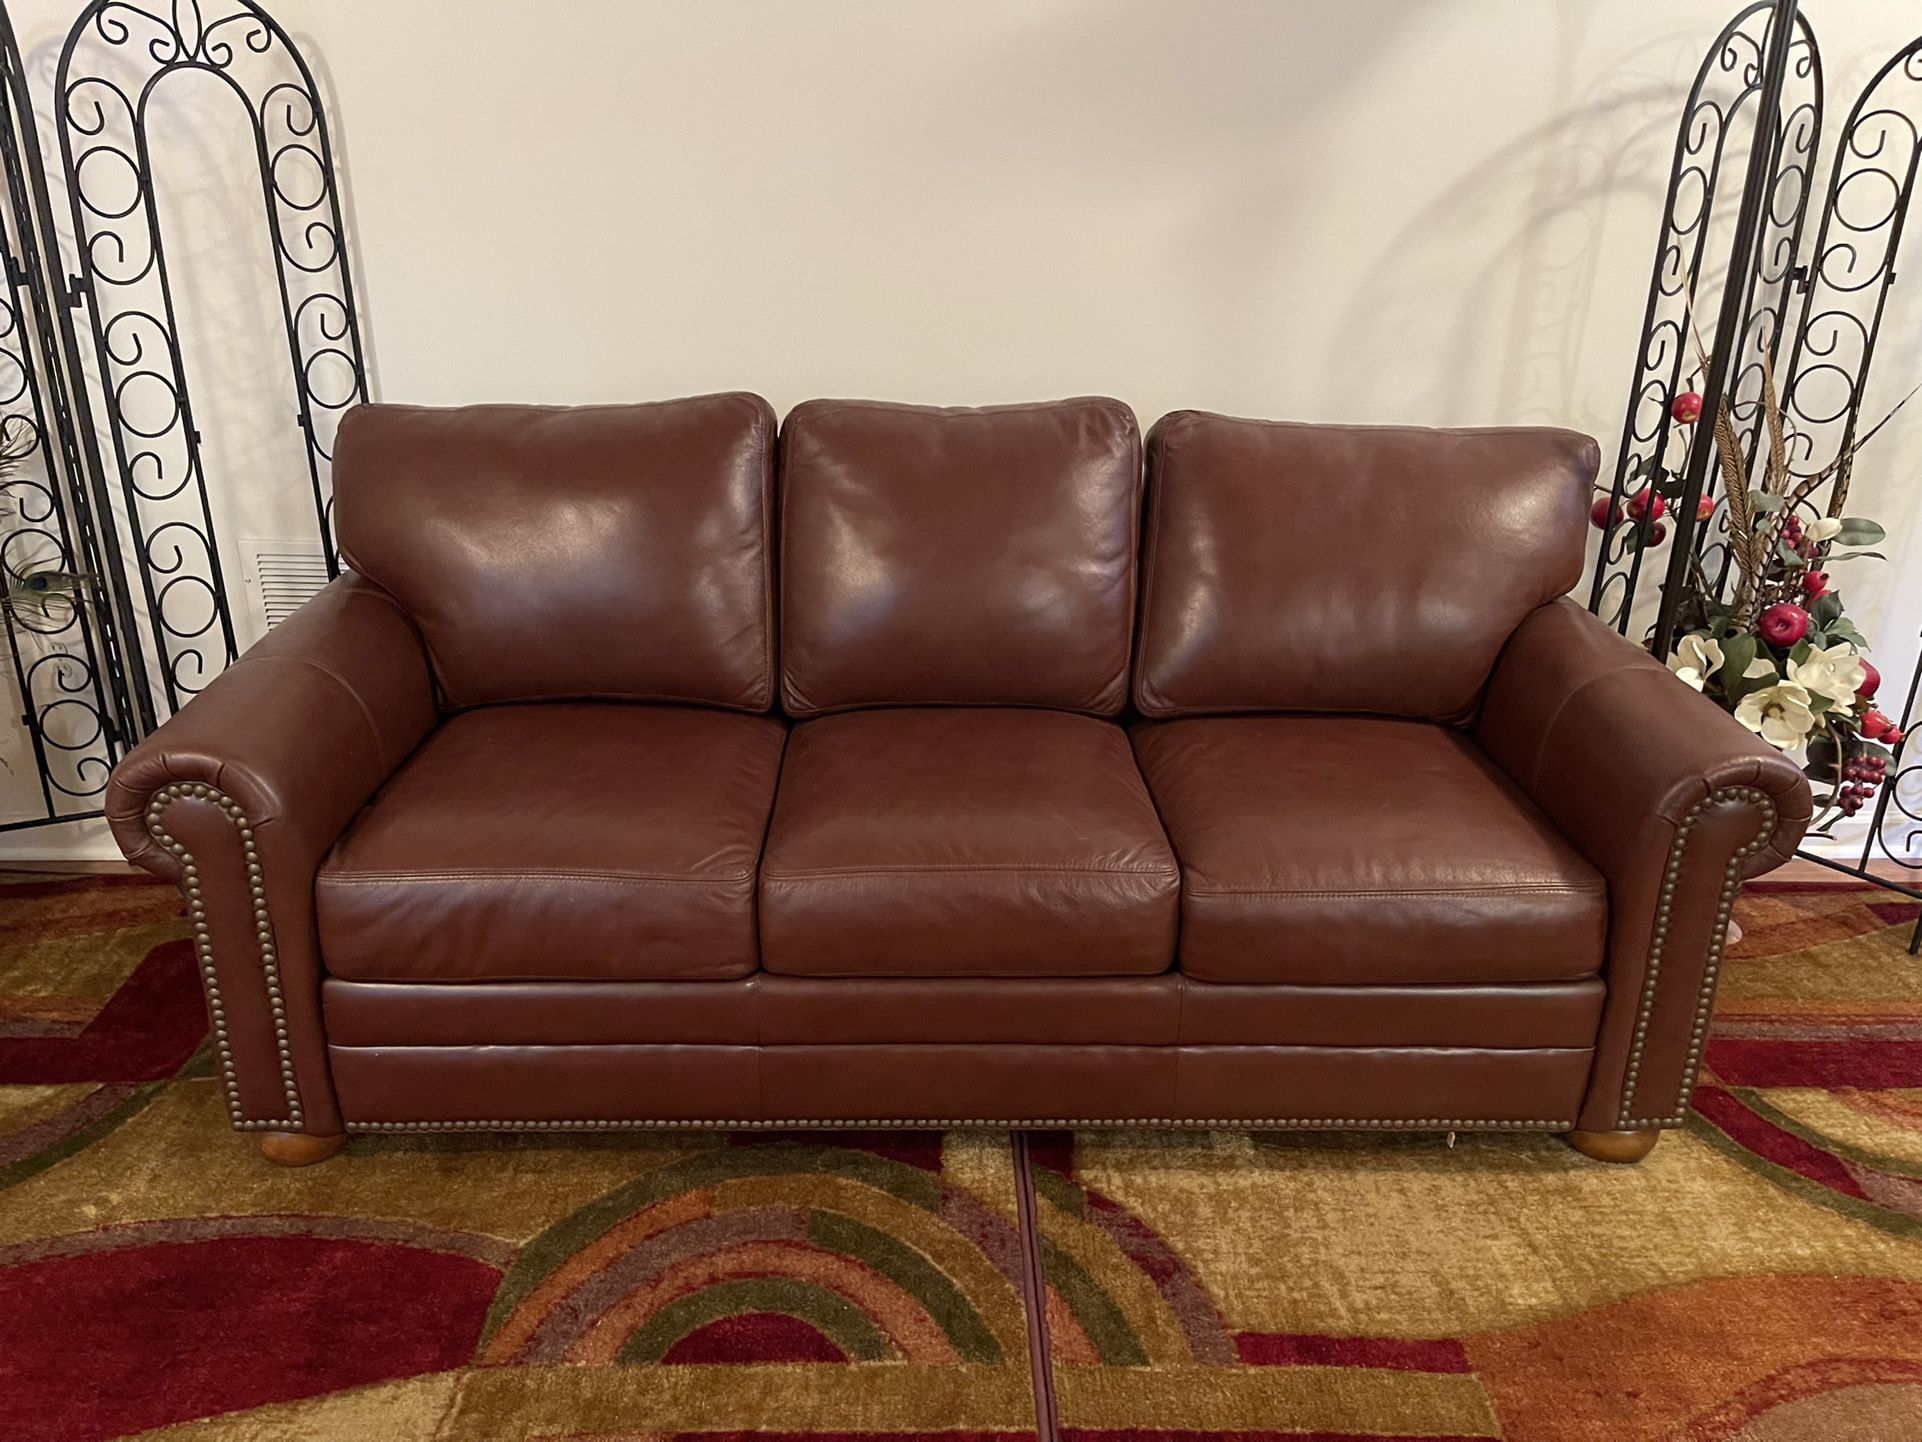 Leather Sleeper Chesterfield Sofa 36Hx82Wx36D, Full Mattress 